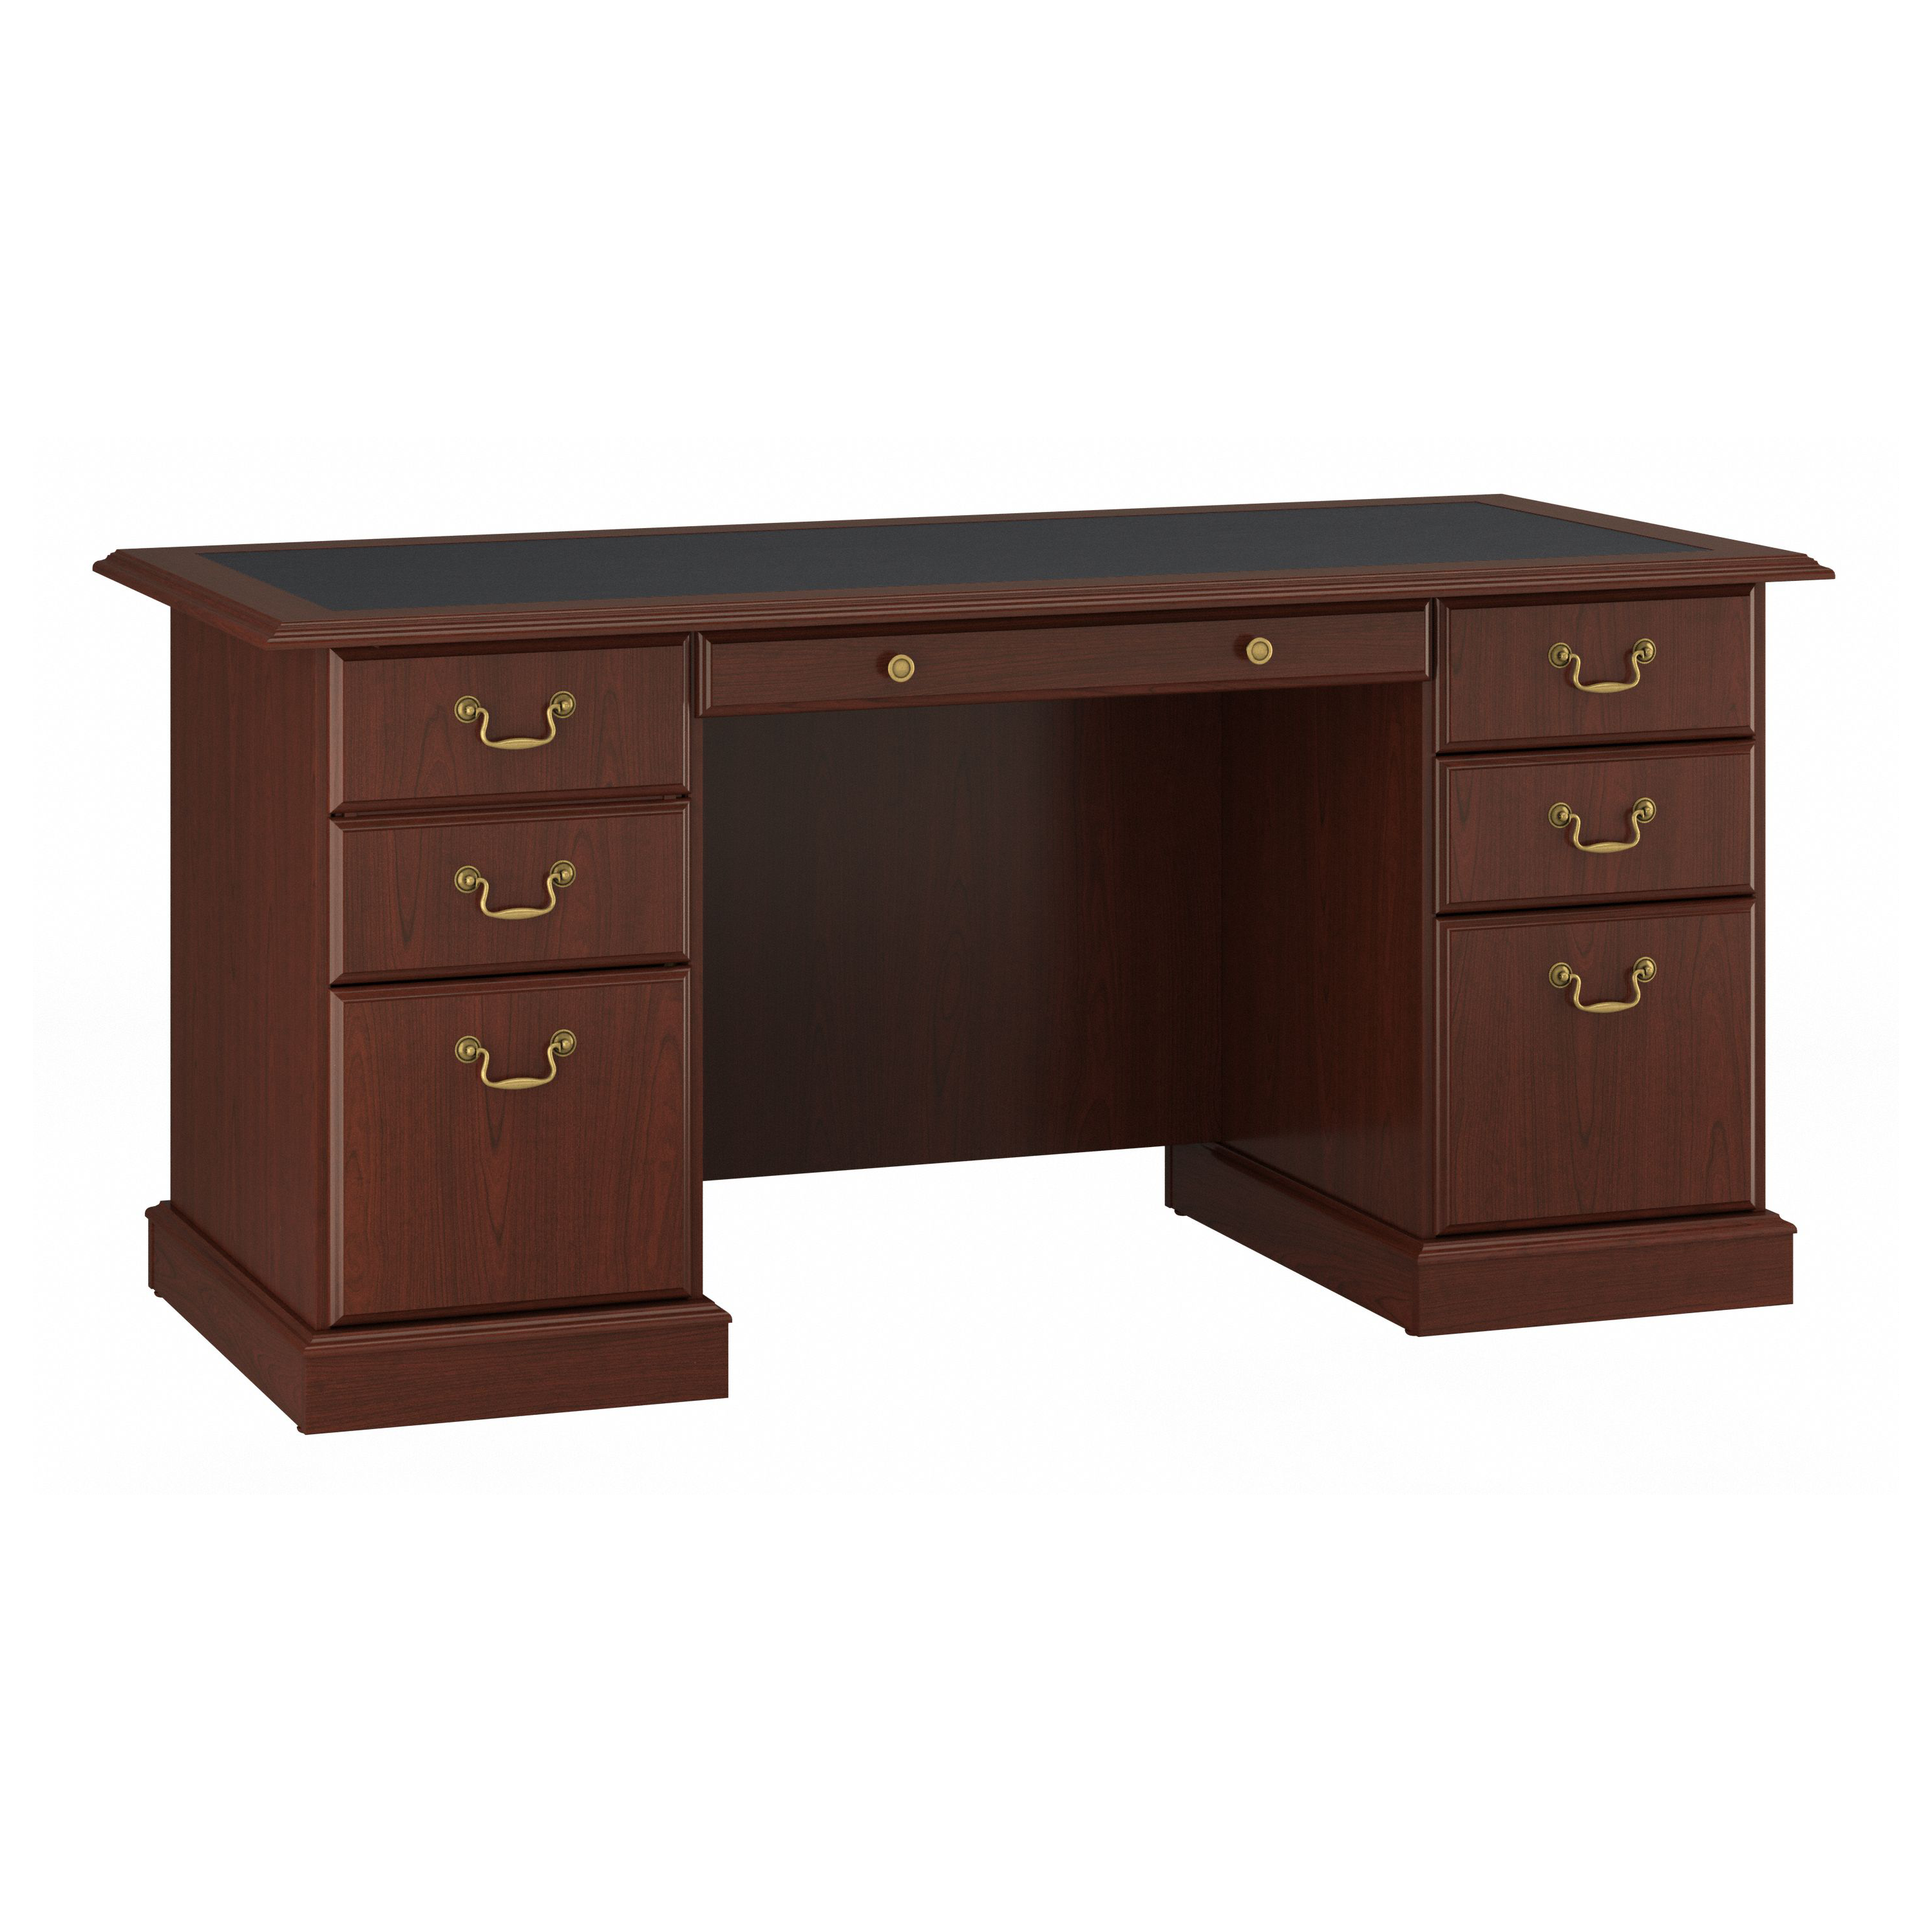 Shop Bush Furniture Saratoga Executive Desk with Drawers 02 EX45666-03K #color_harvest cherry